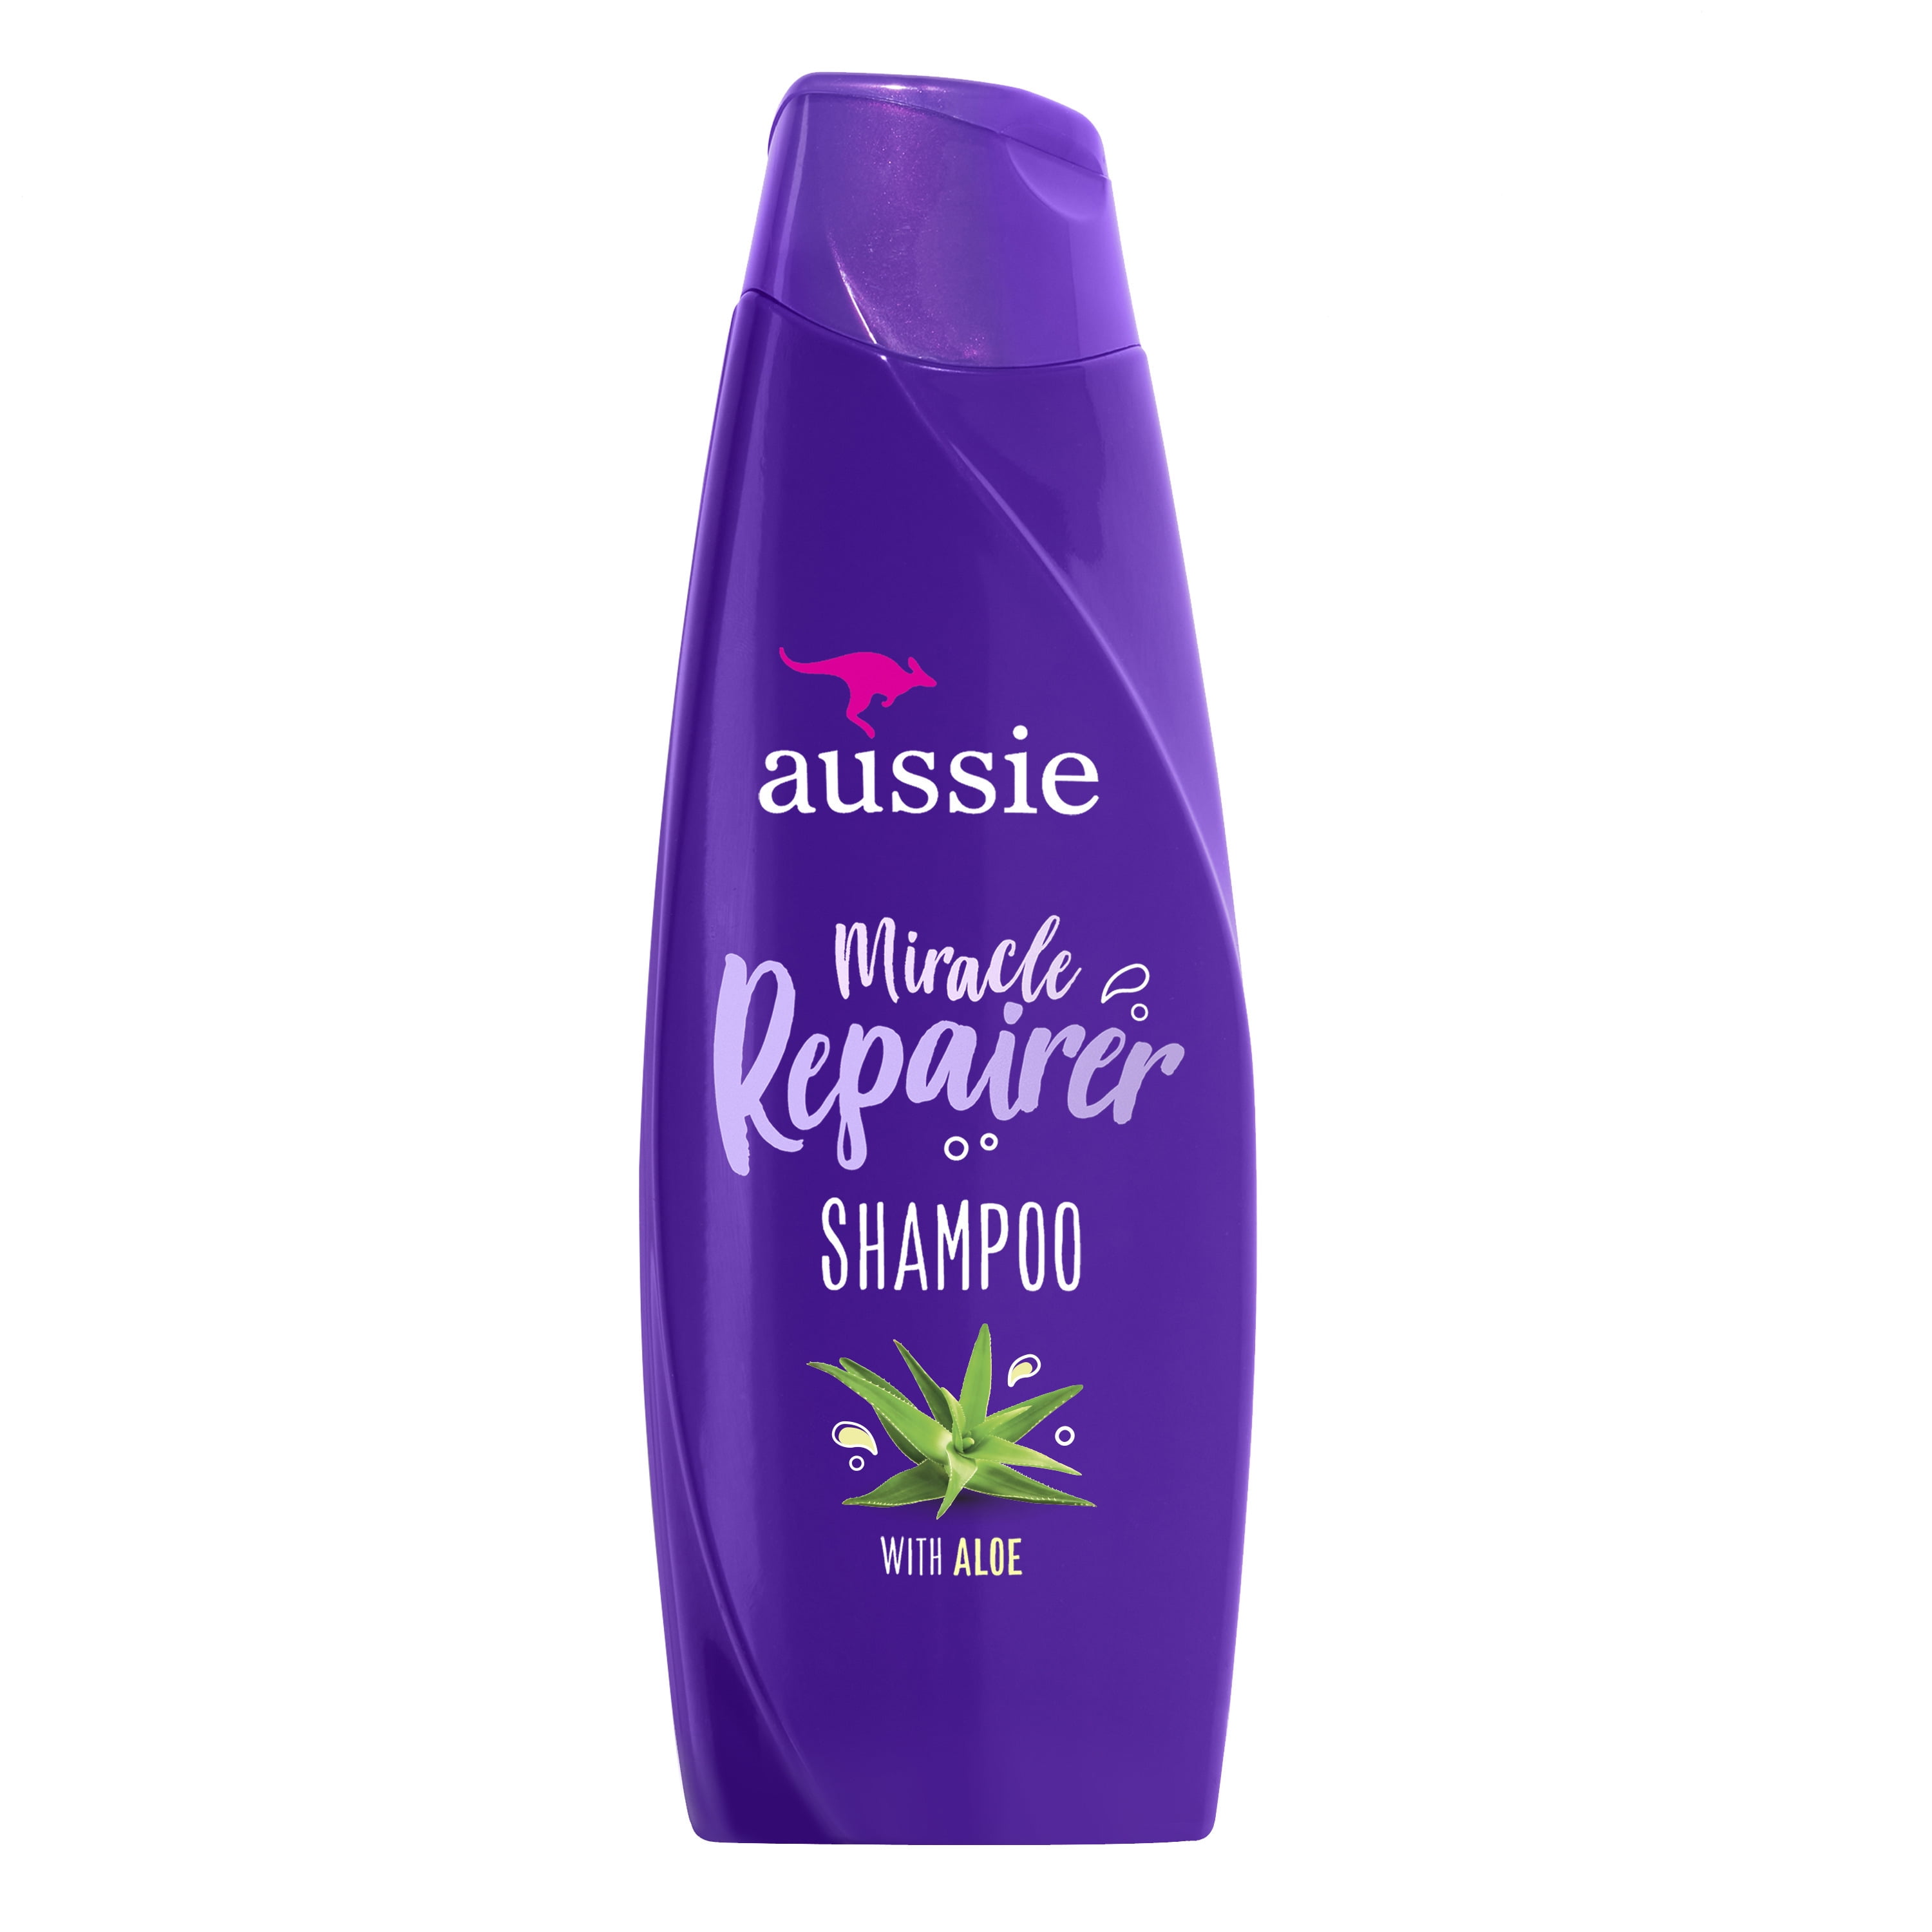 Aussie Miracle Shampoo with Aloe for All Hair Types, 12.1 fl oz - Walmart.com